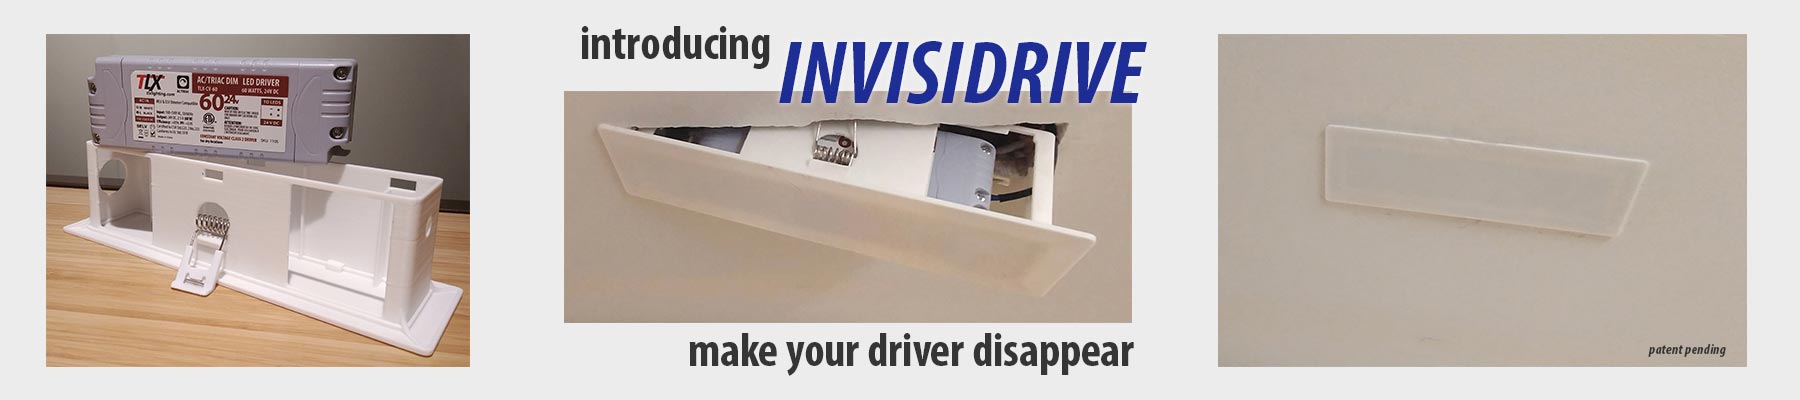 Introducing Invisidrive